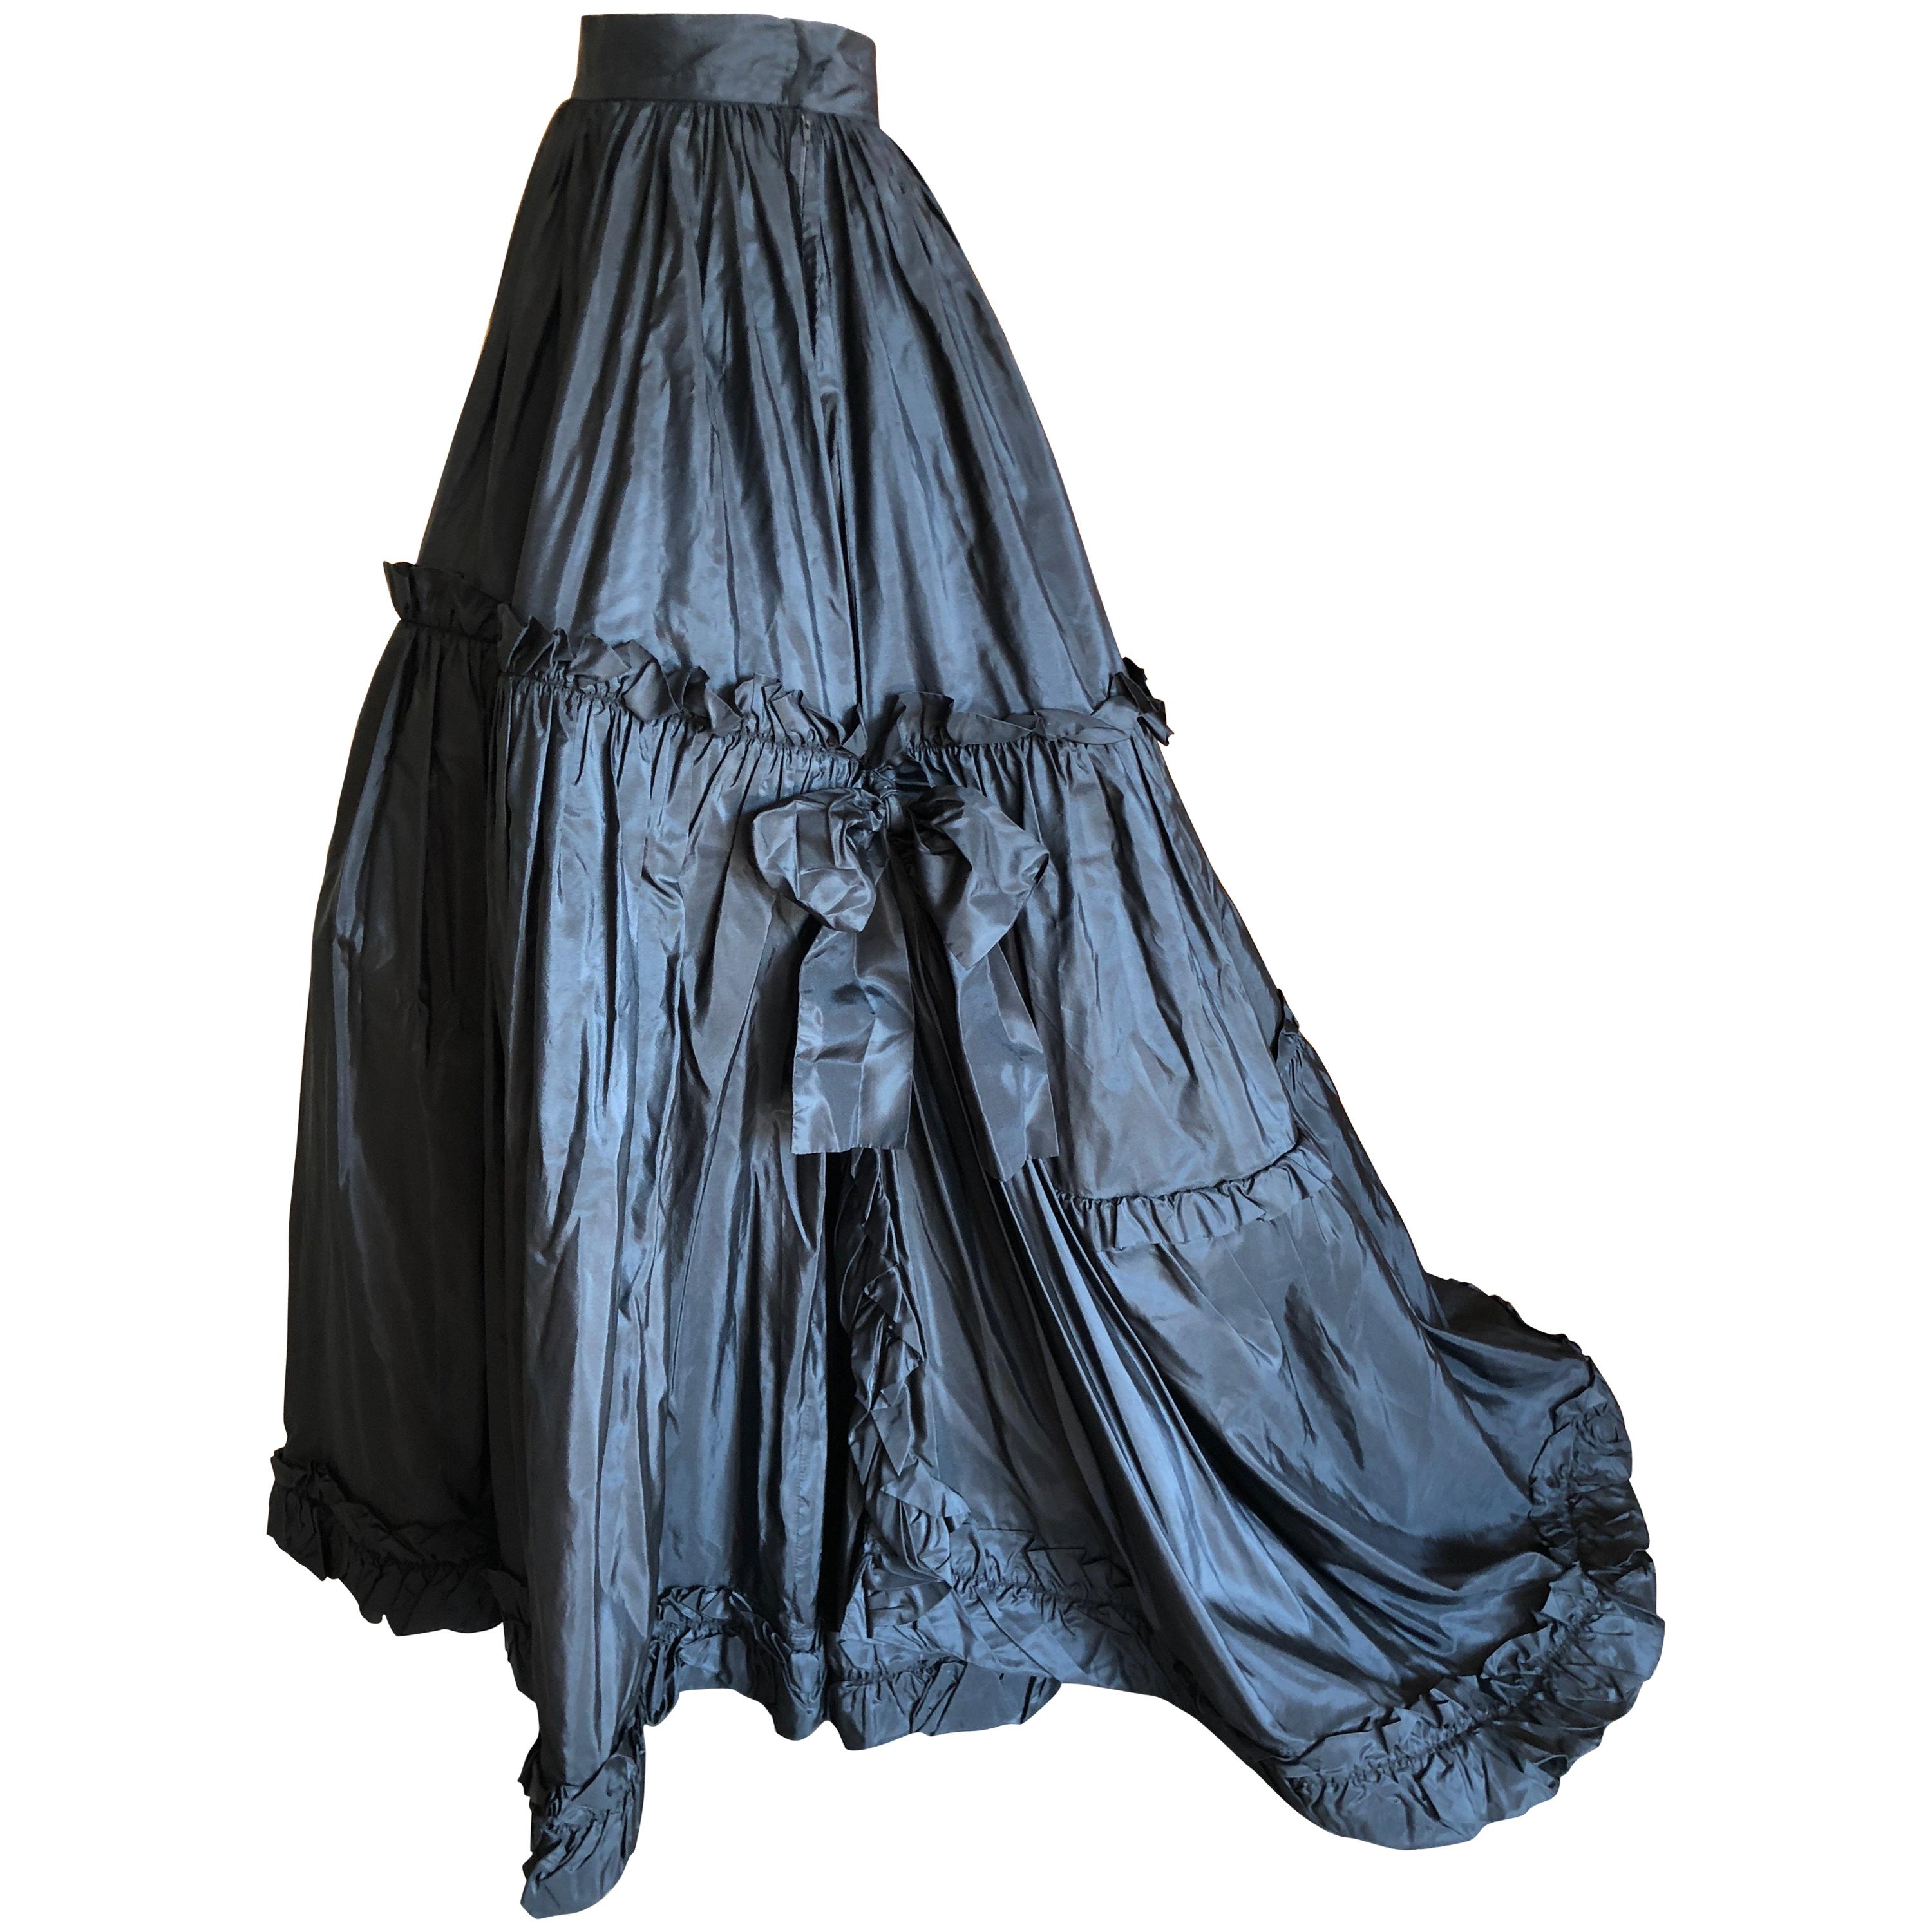 Yves Saint Laurent Rive Guache 1982 Dramatic Black Taffeta Ball Skirt with Train For Sale